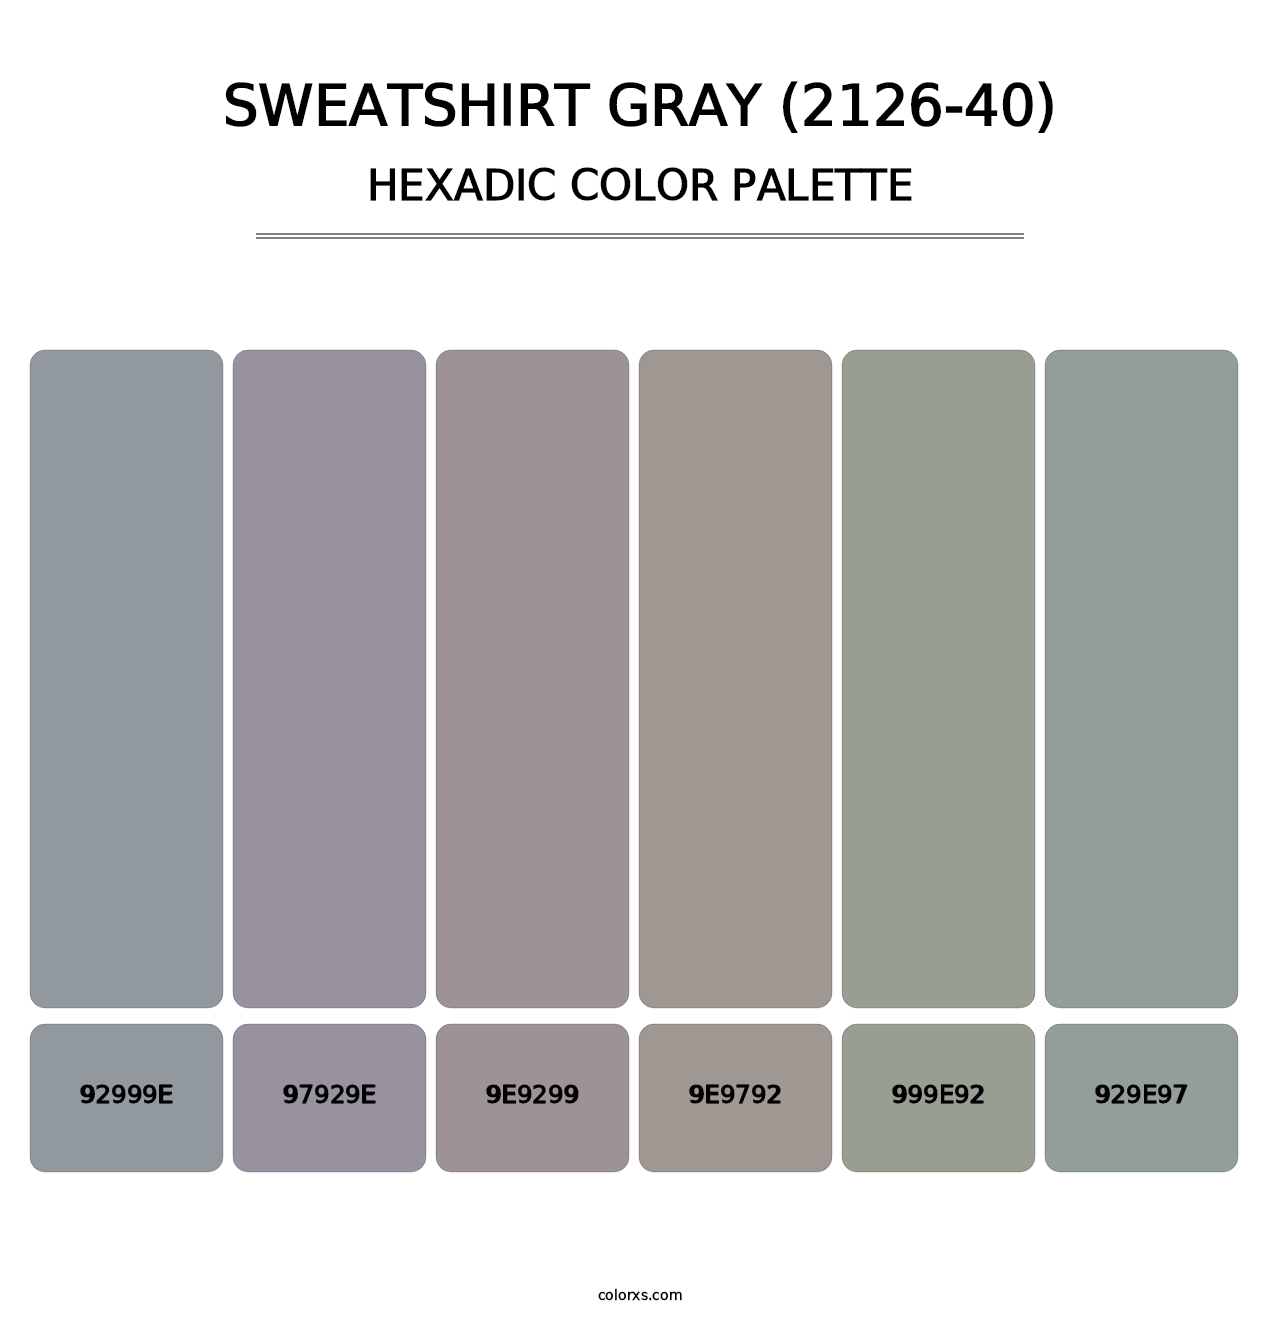 Sweatshirt Gray (2126-40) - Hexadic Color Palette